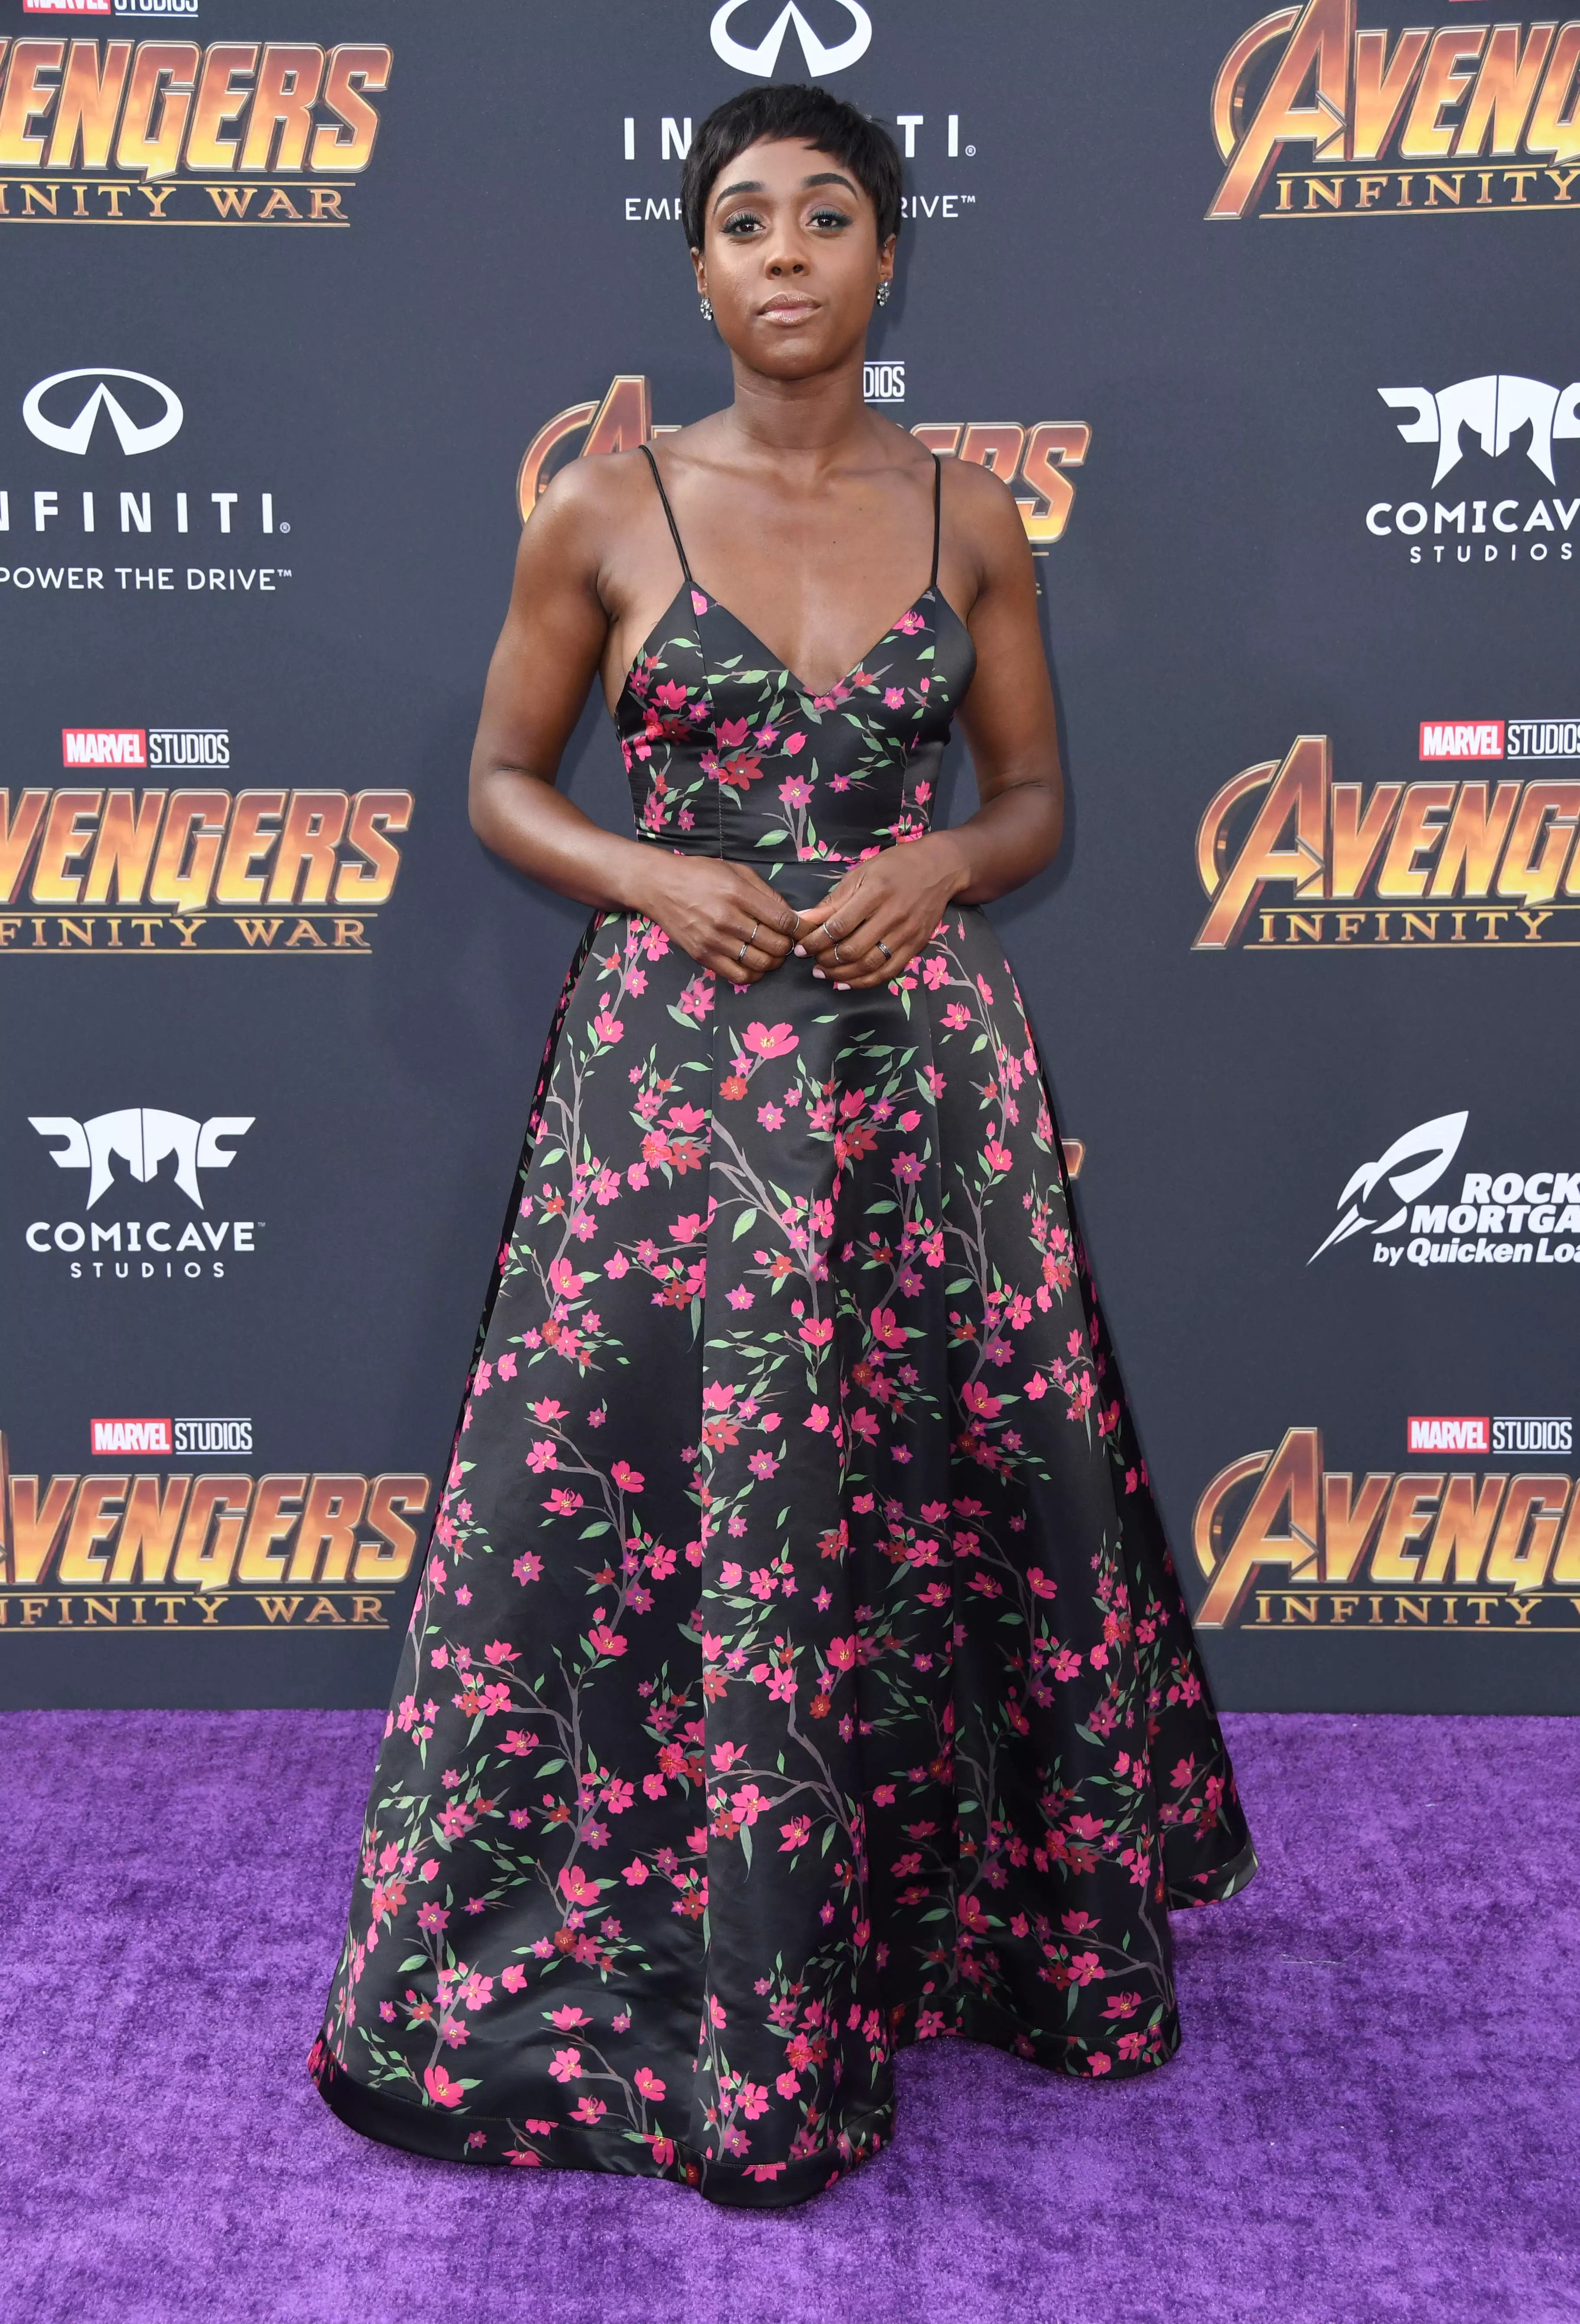 The actress recently starred in superhero flick Captain Marvel.